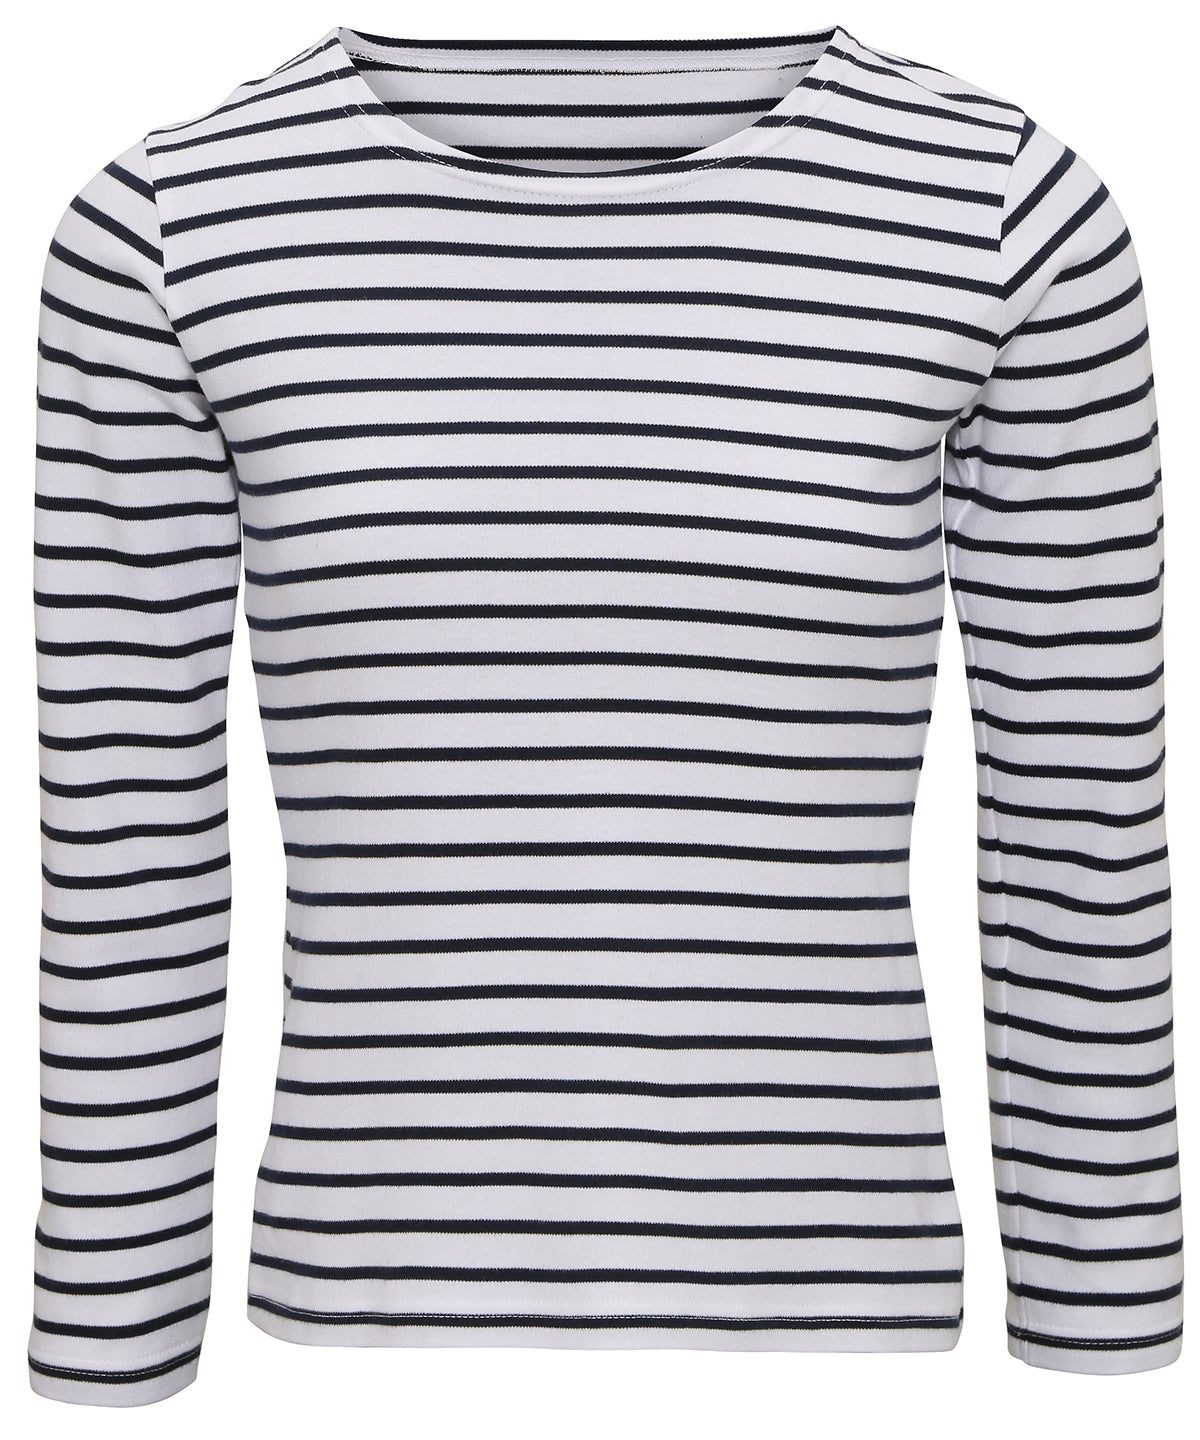 Personalised T-Shirts - Stripes Asquith & Fox Women's Marinière coastal long sleeve tee